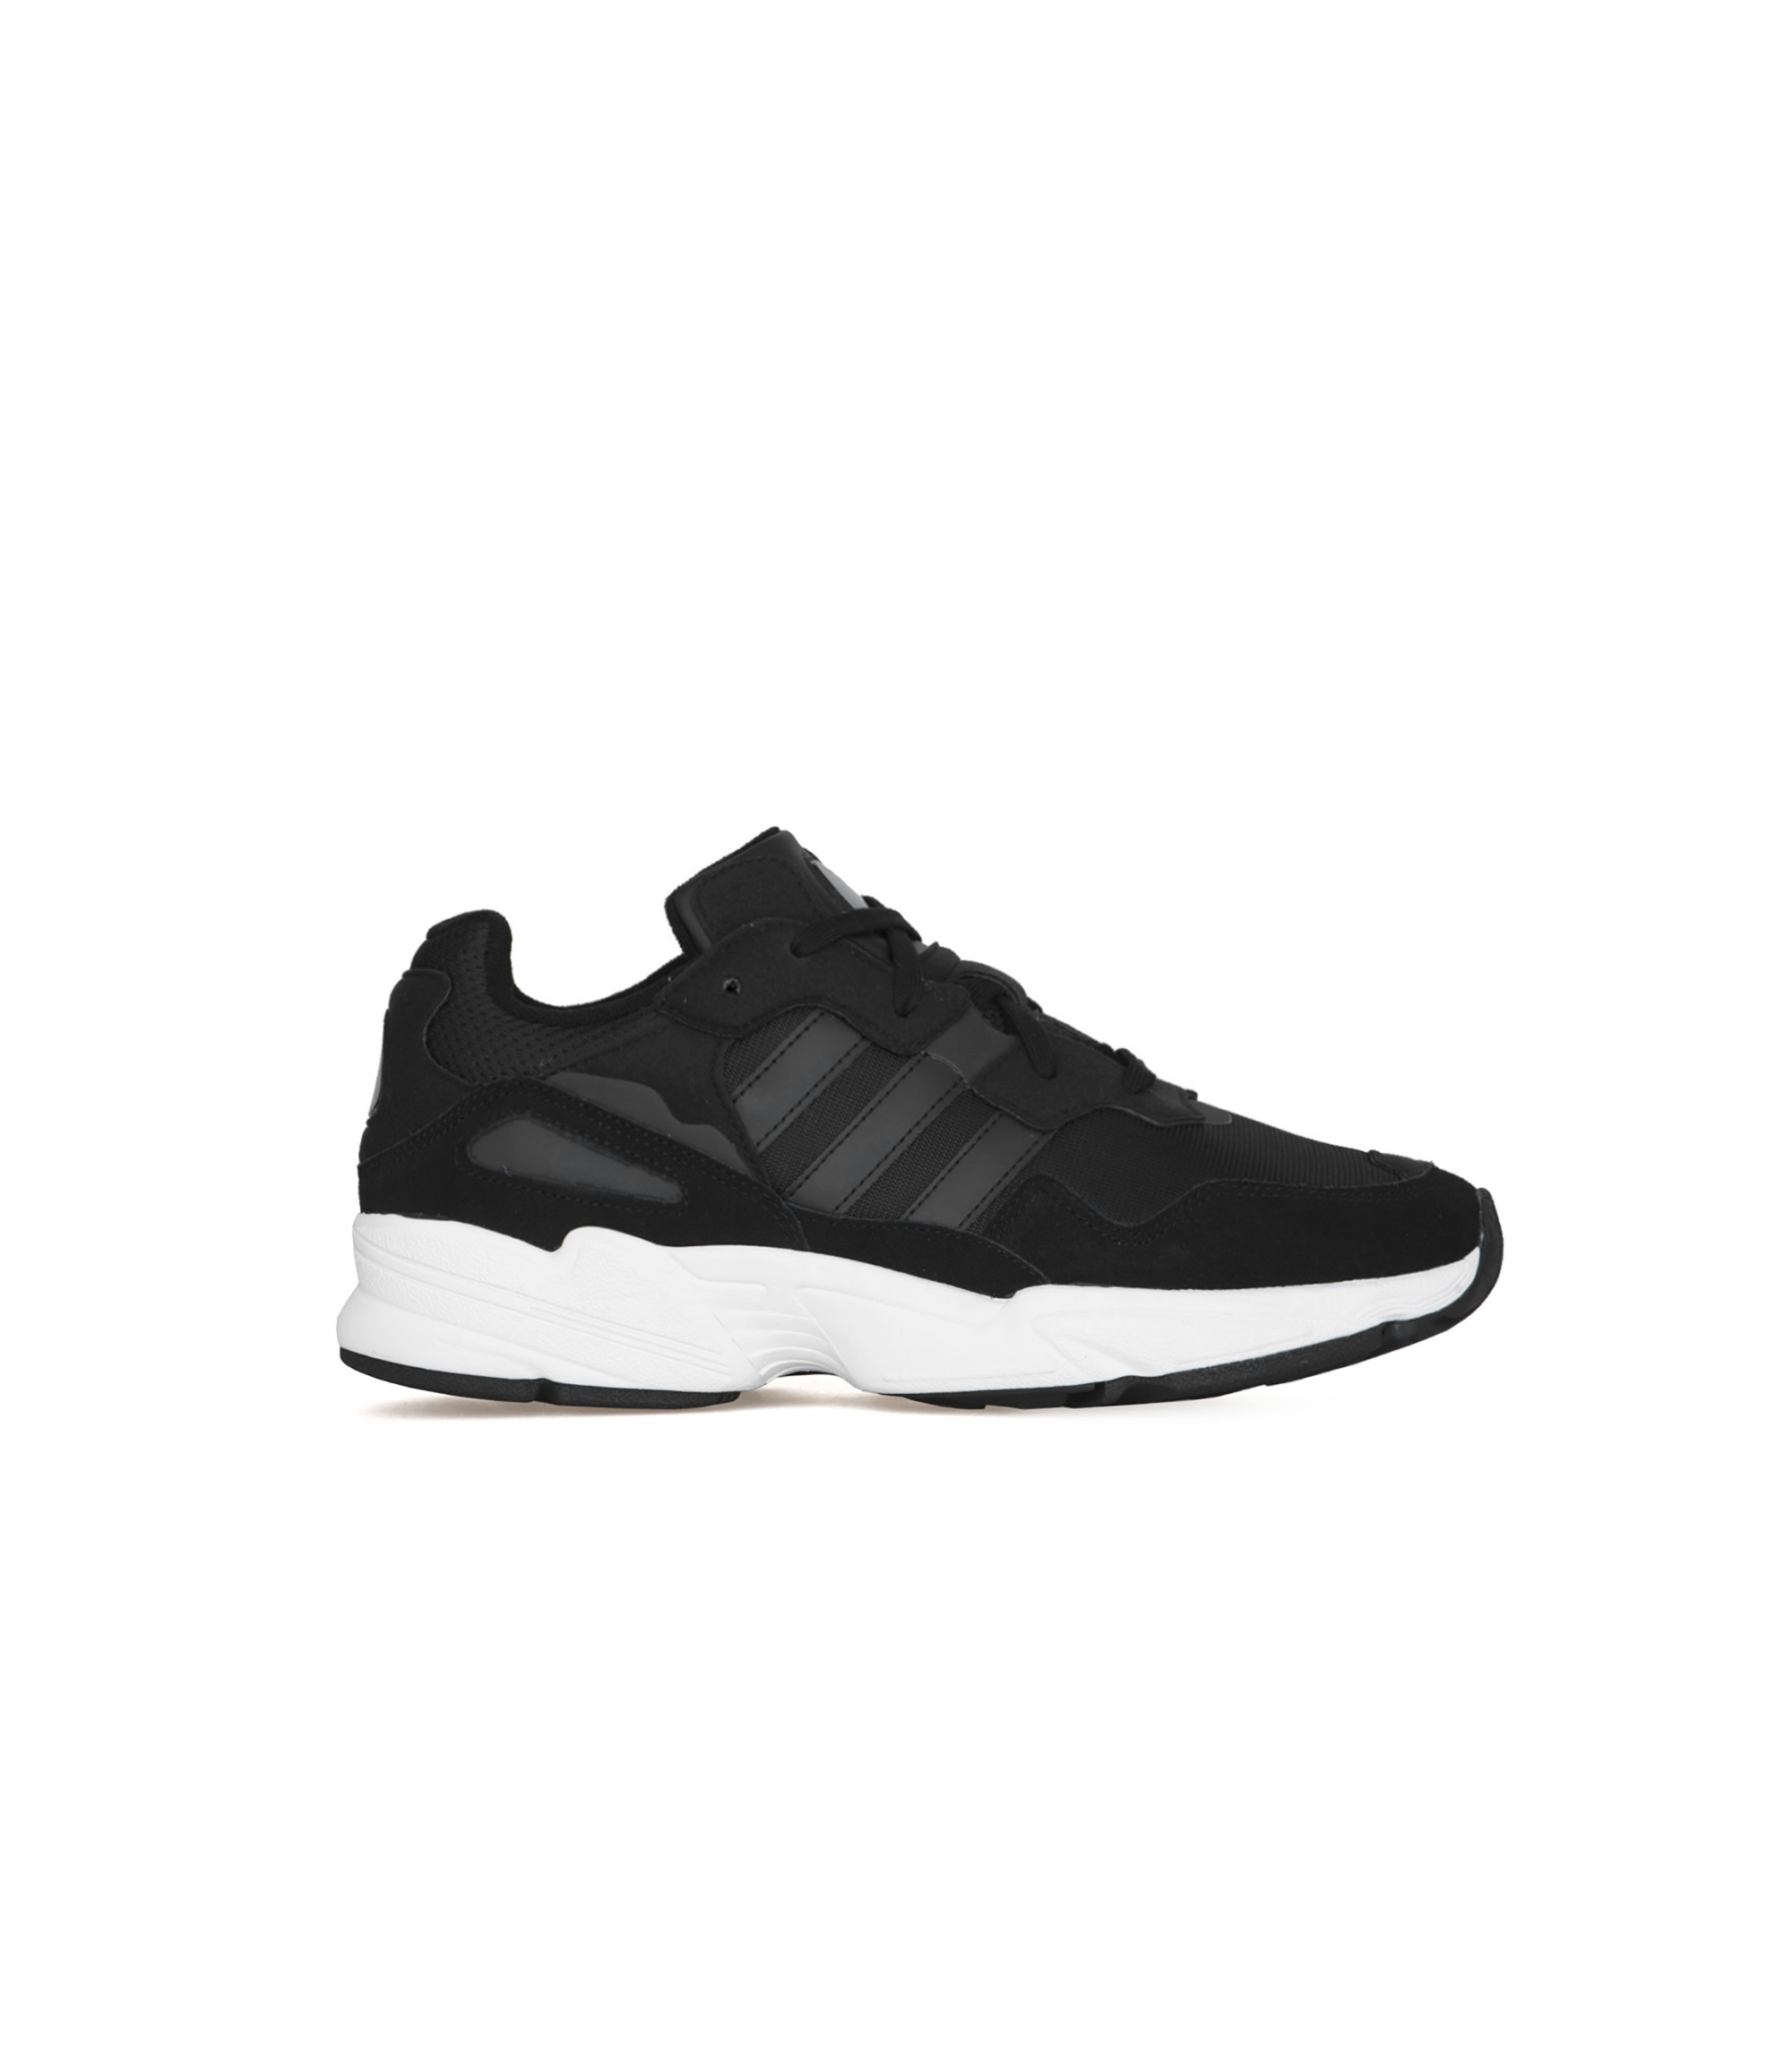 Shop adidas Originals Yung-96 Black/White at itk online store